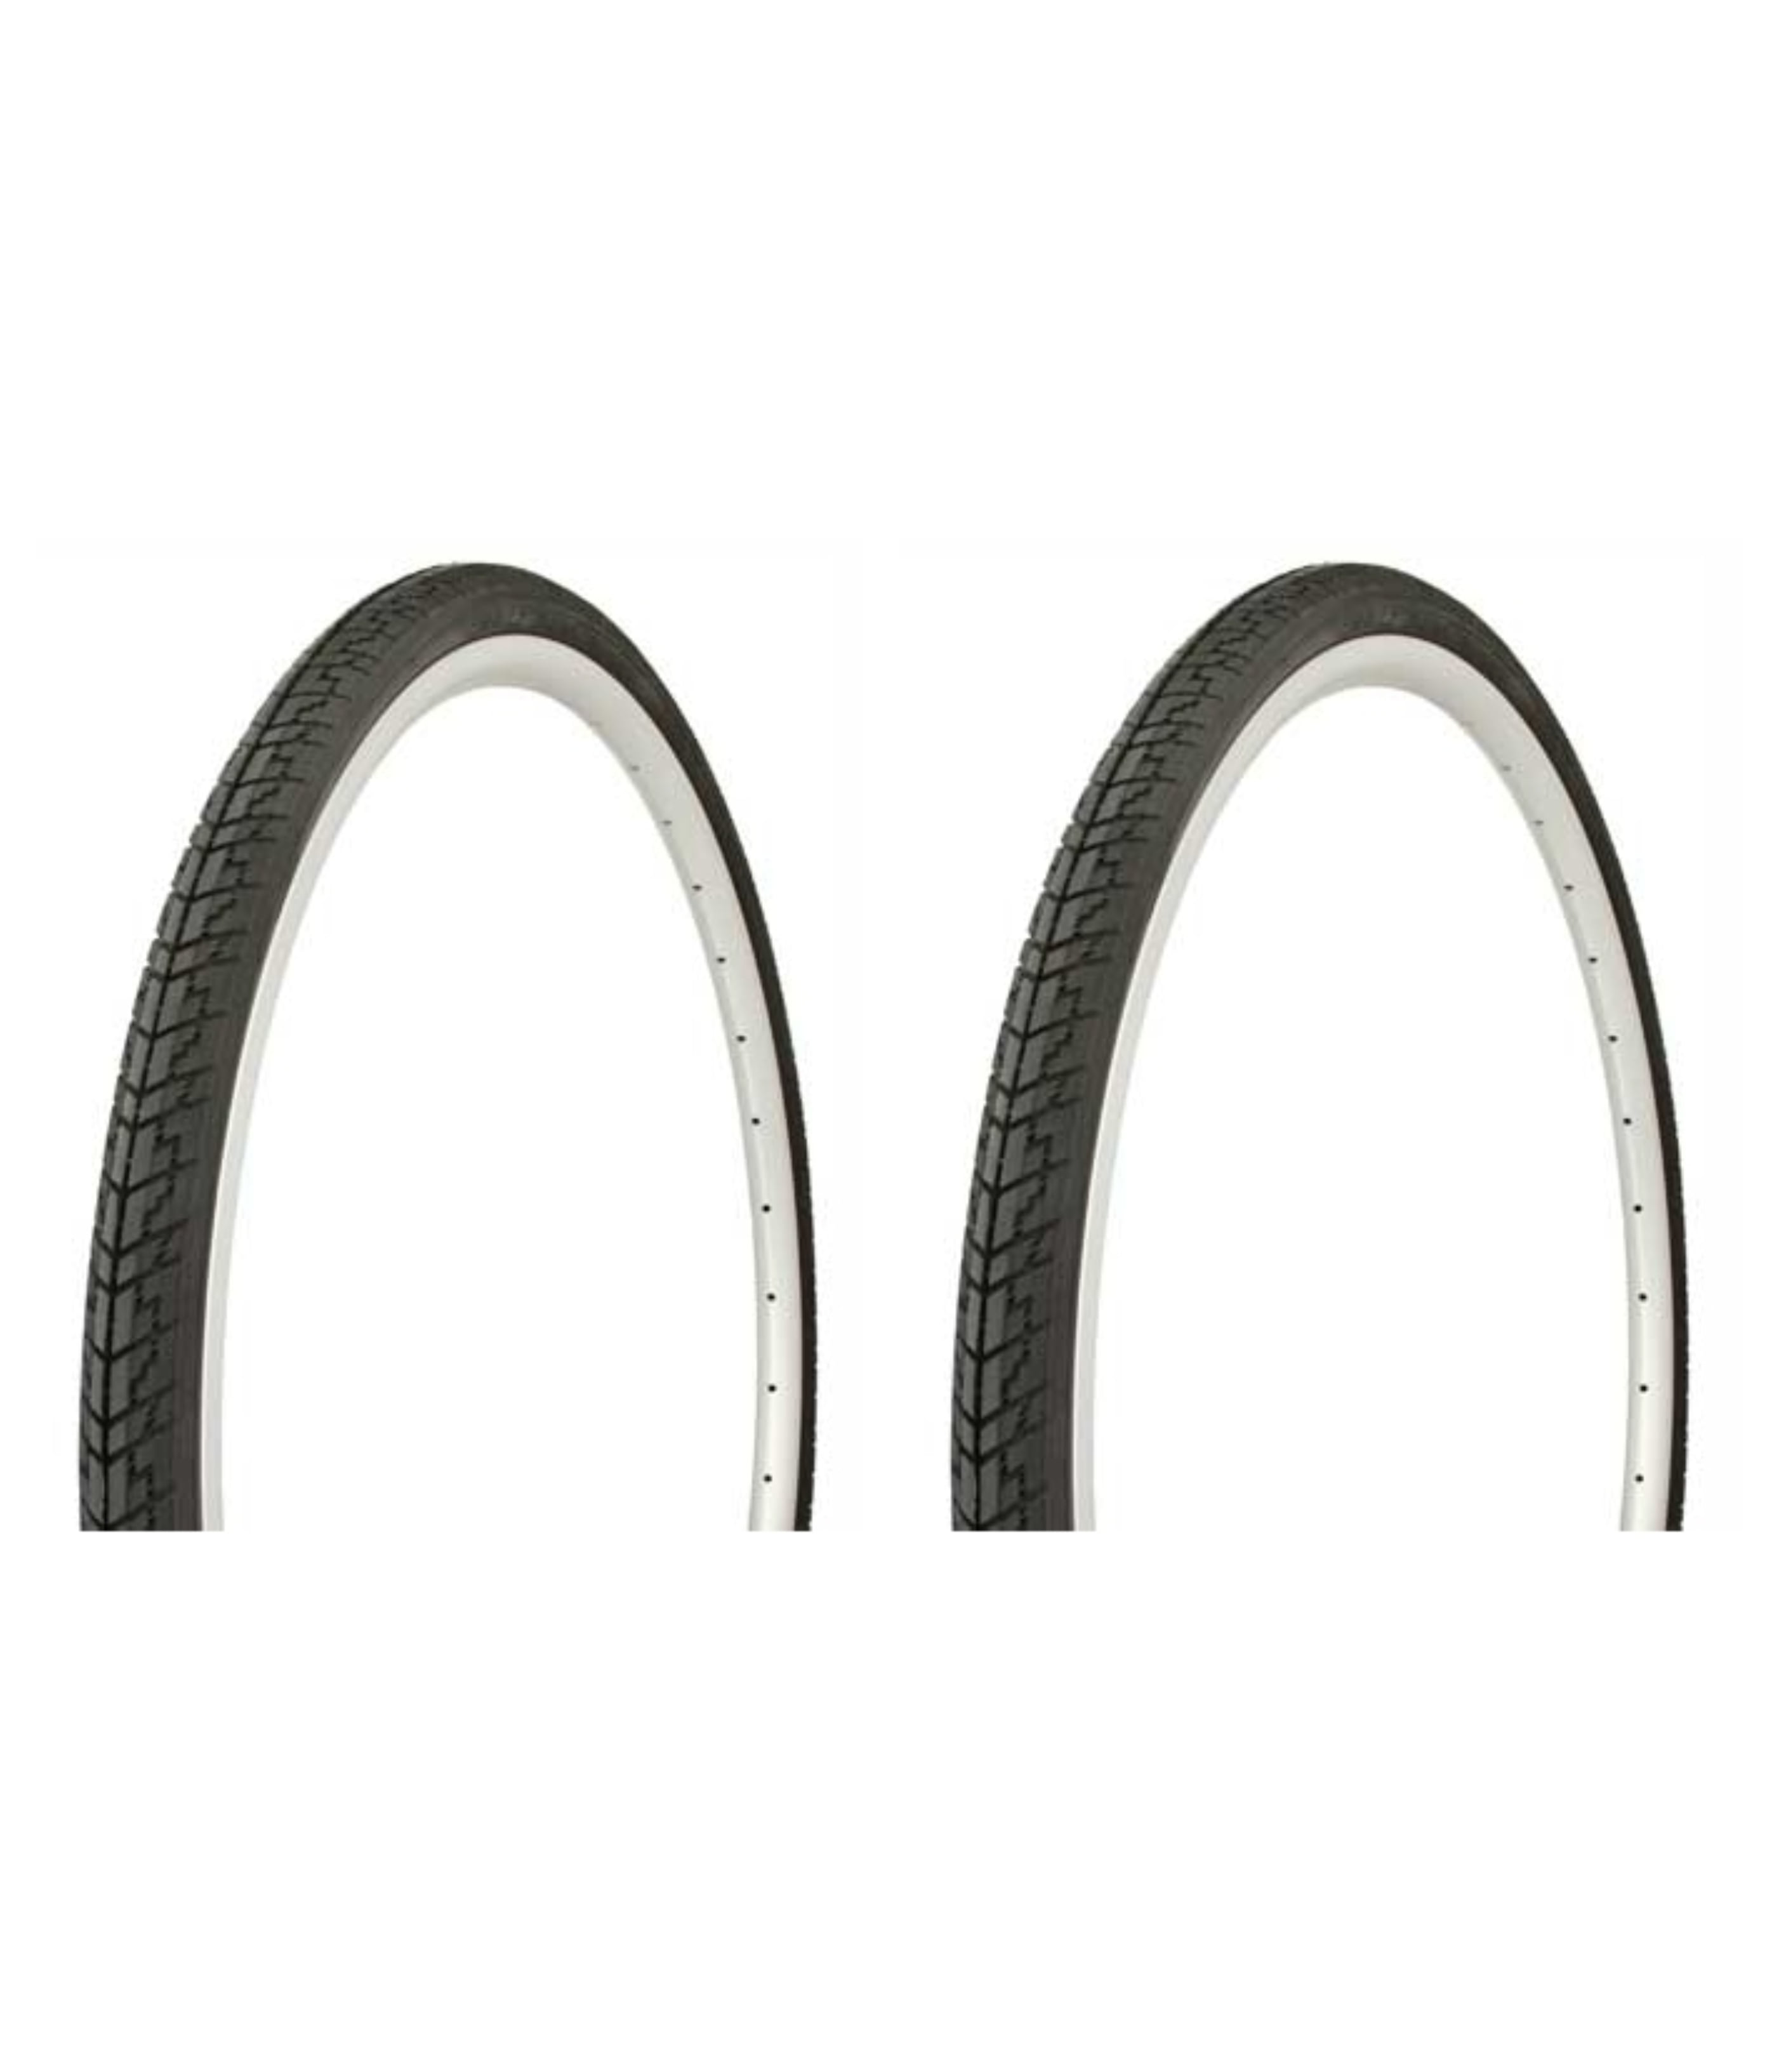 2 TWO 2 Tubes Road Fixie Bike Black/Gum 700c DURO700x35c  Gum Wall Tires 